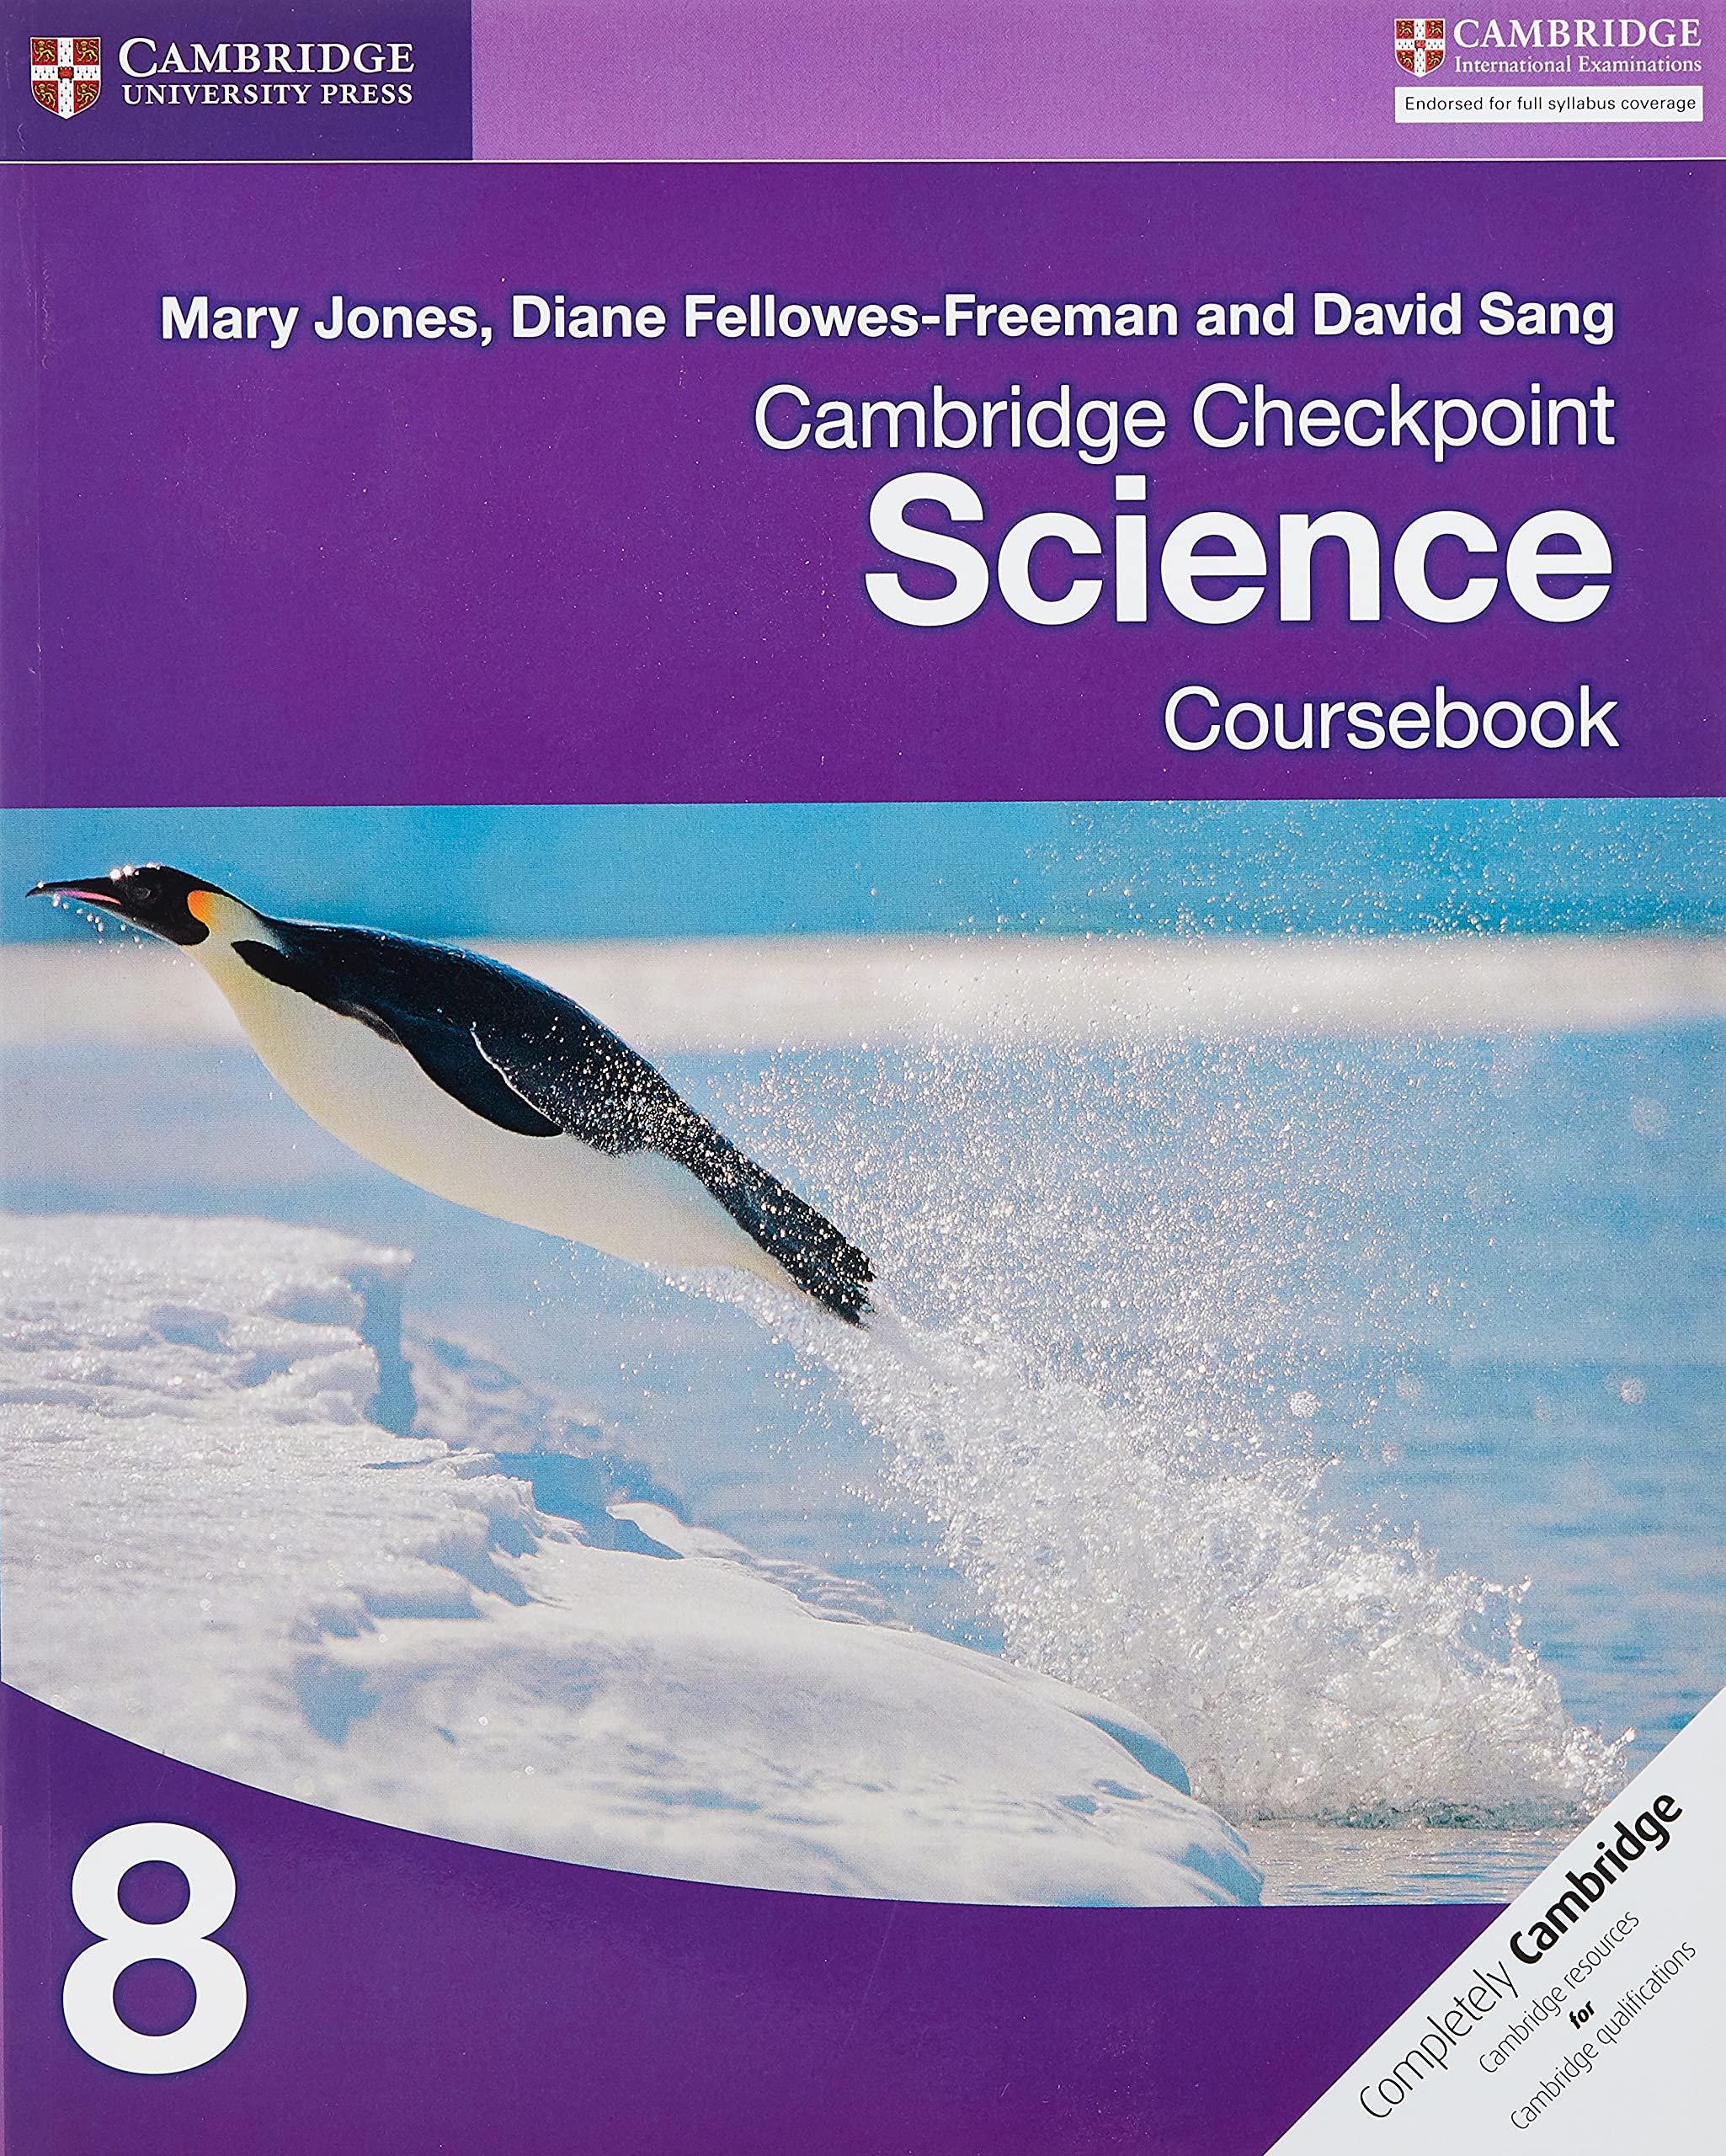 Book Cover Cambridge Checkpoint Science Coursebook 8 (Cambridge International Examinations)